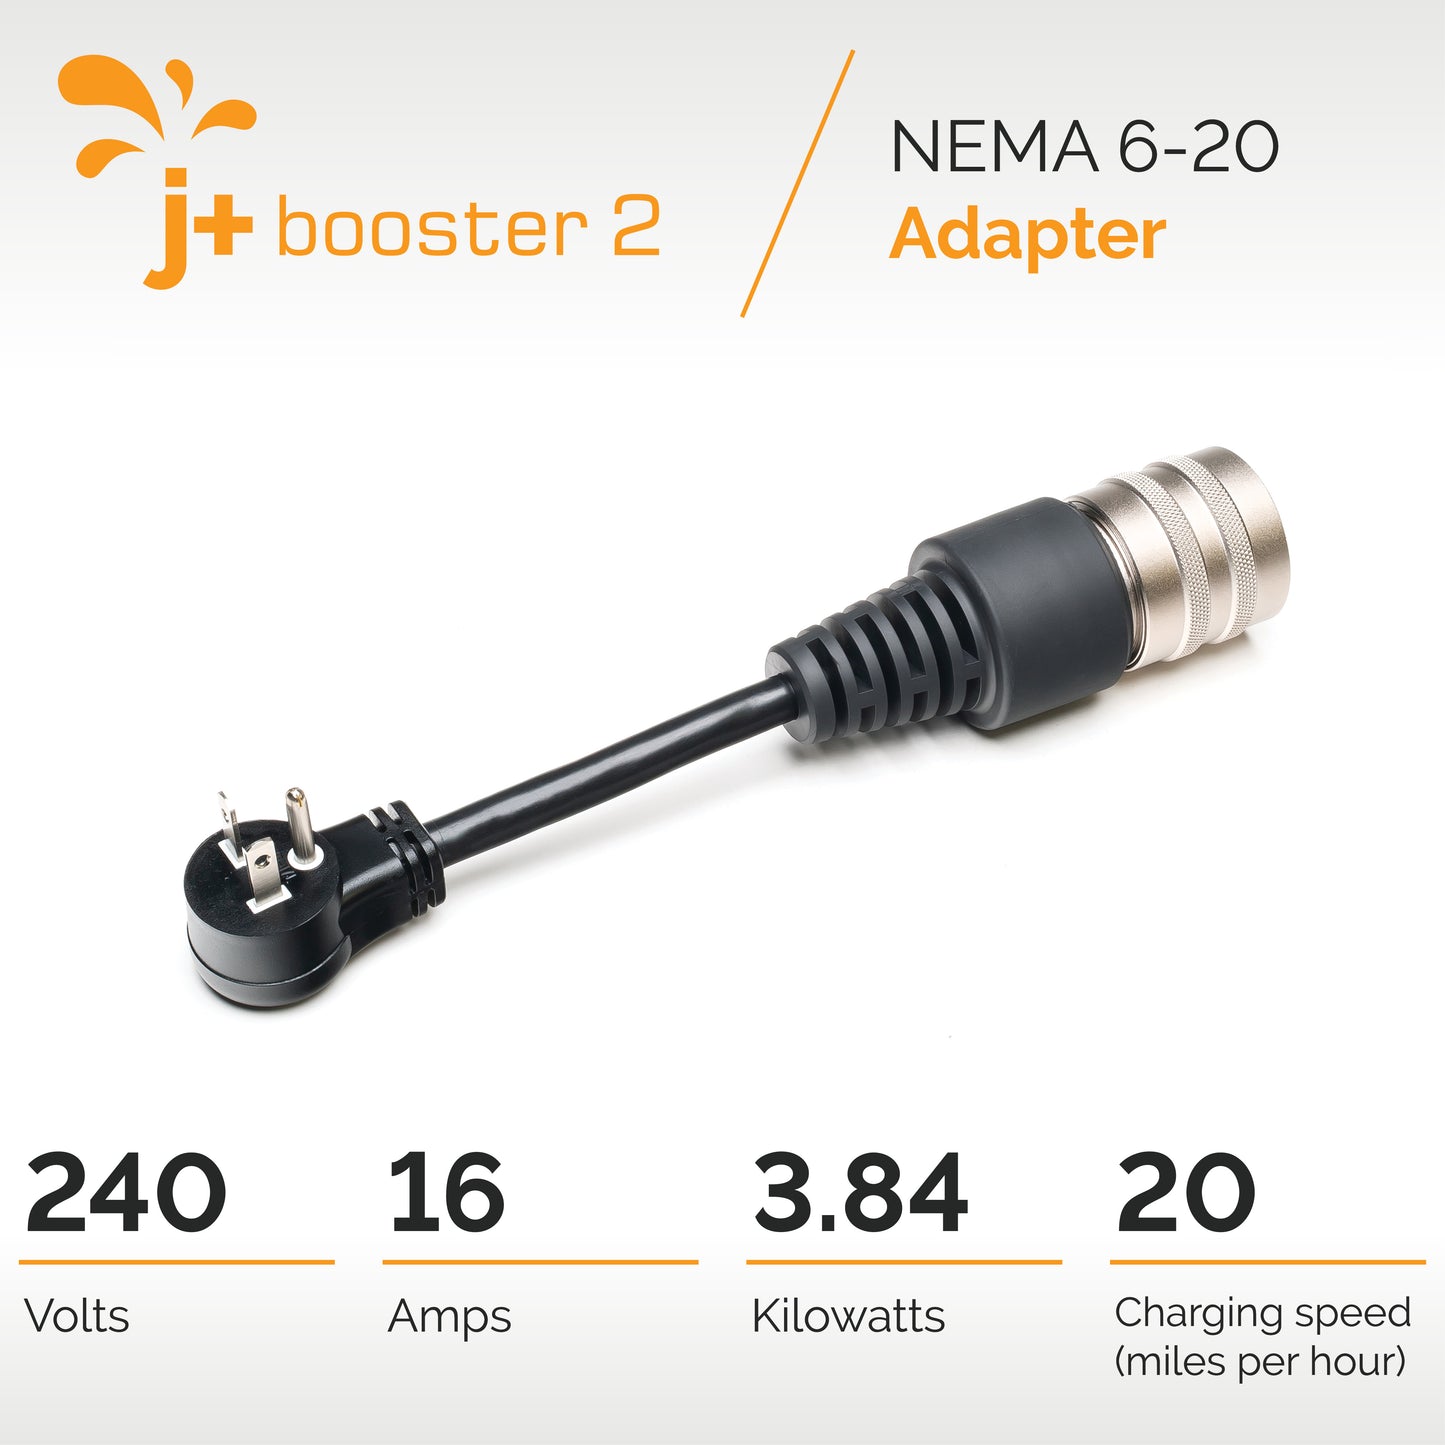 NEMA 6-20 Adapter